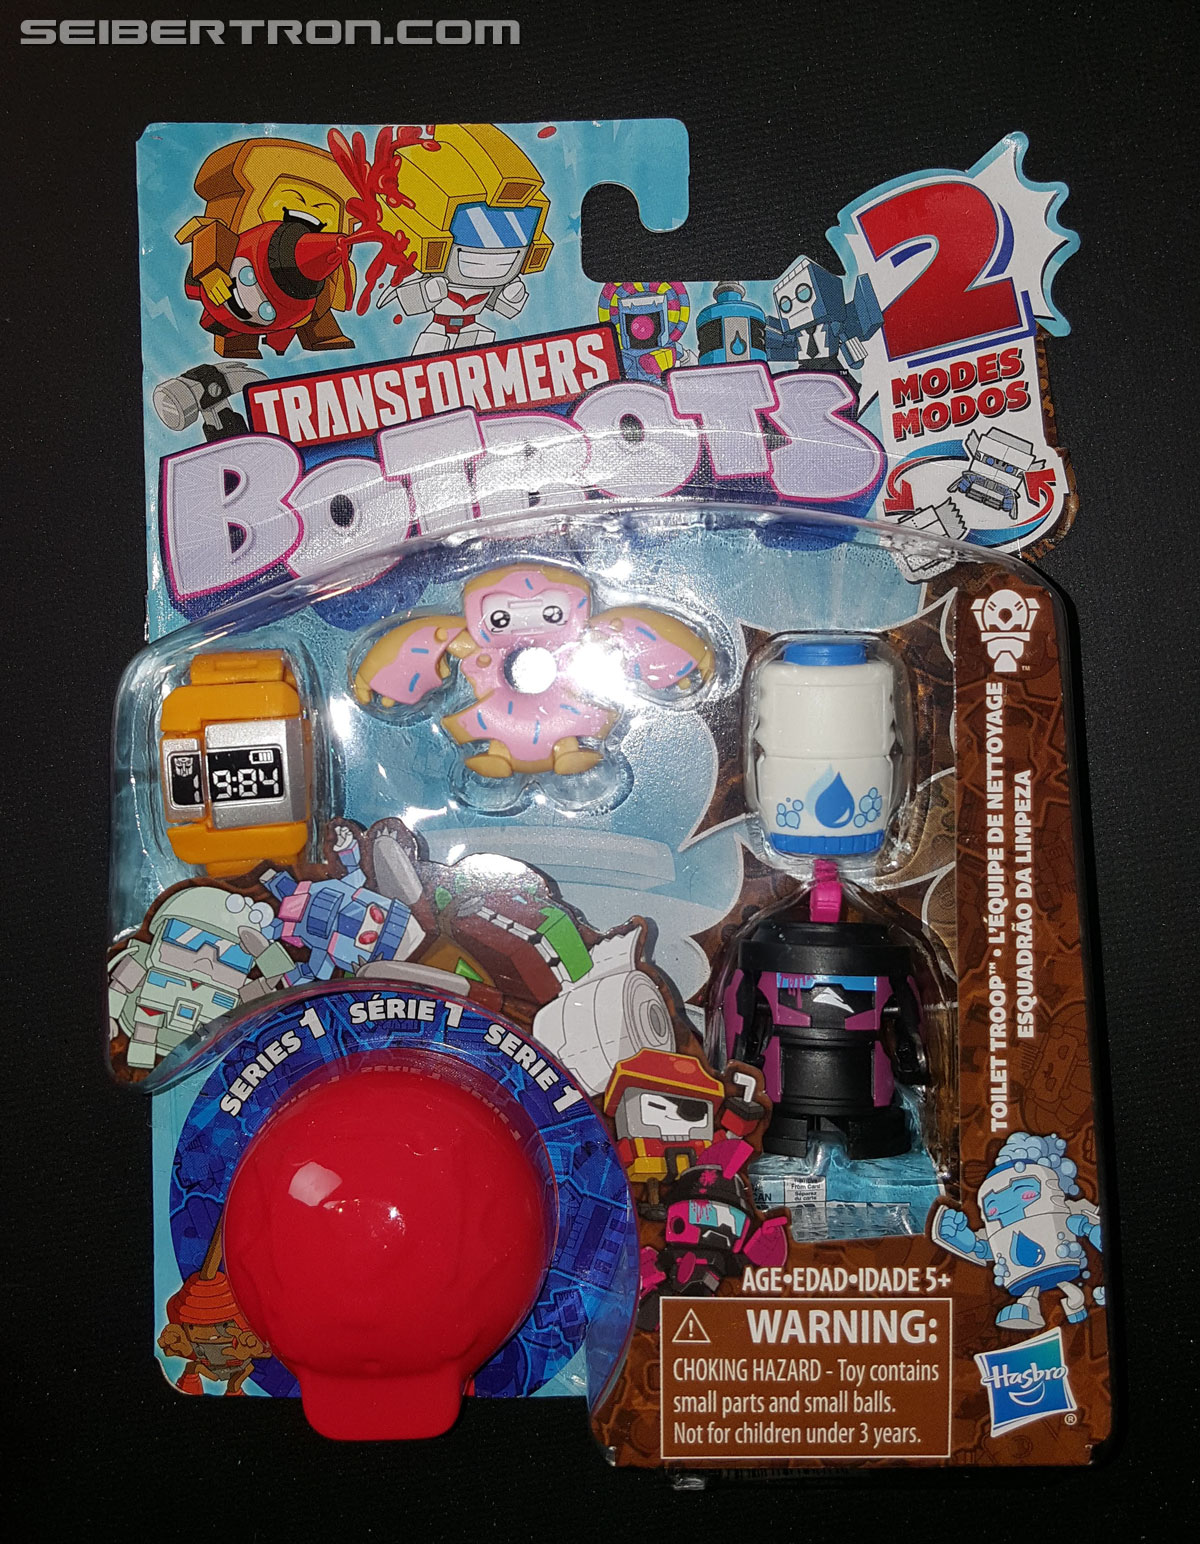 Transformers BotBots Series 1 Promo Box